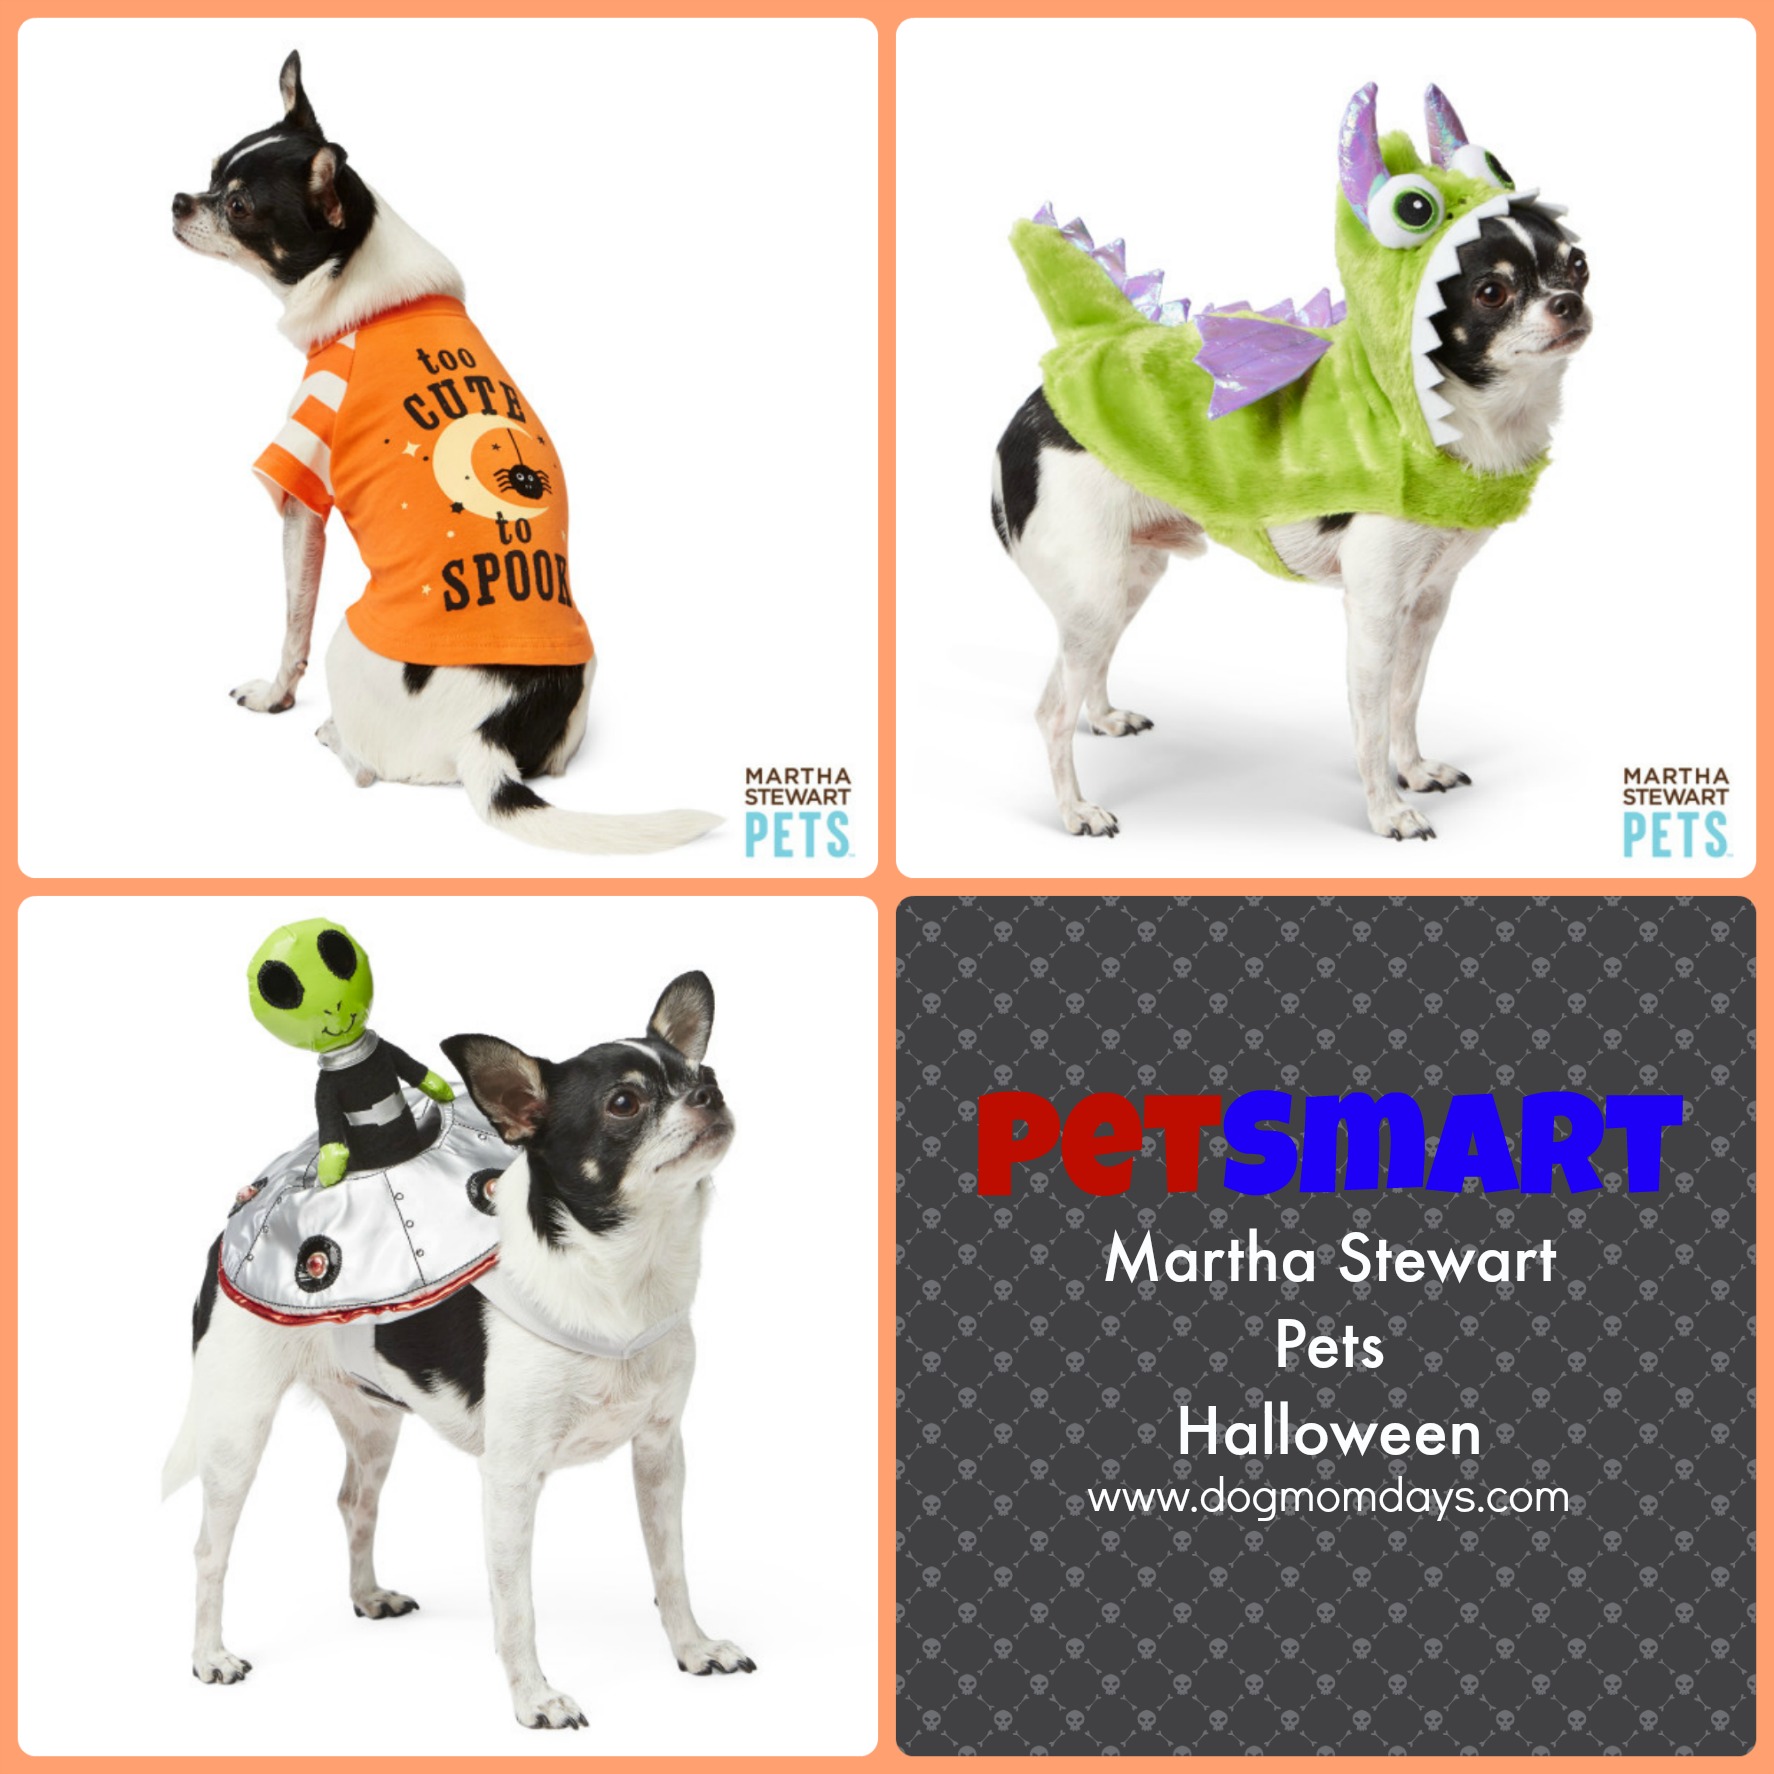 Chihuahua Halloween costumes at PetSmart